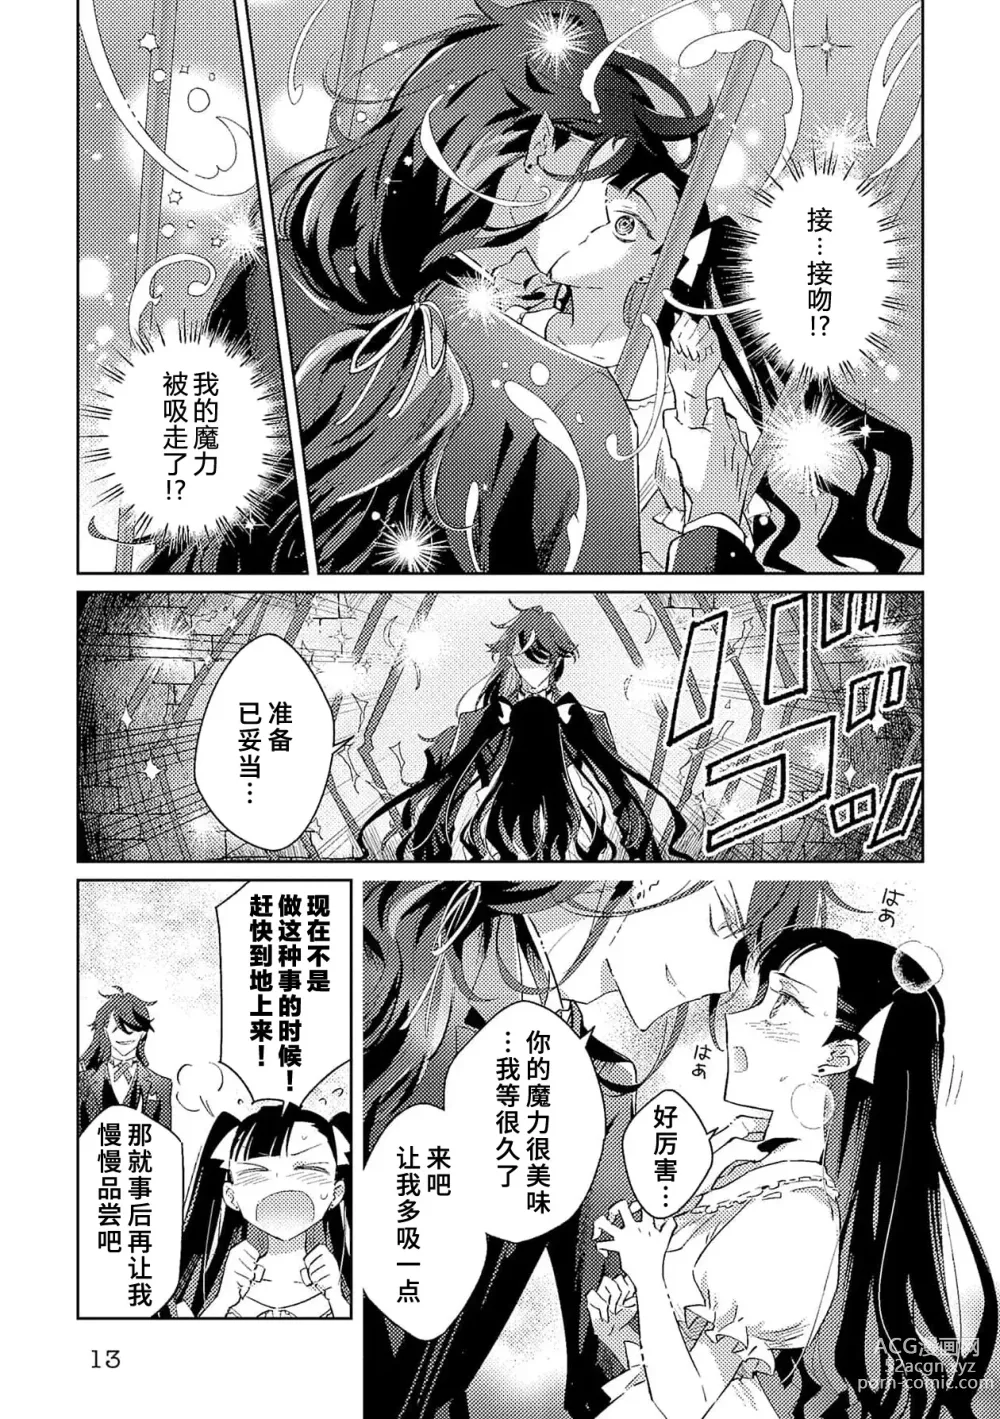 Page 13 of manga 身为恶役千金，堕落于魔界王子身下这条路线真的可以有？ 1-7